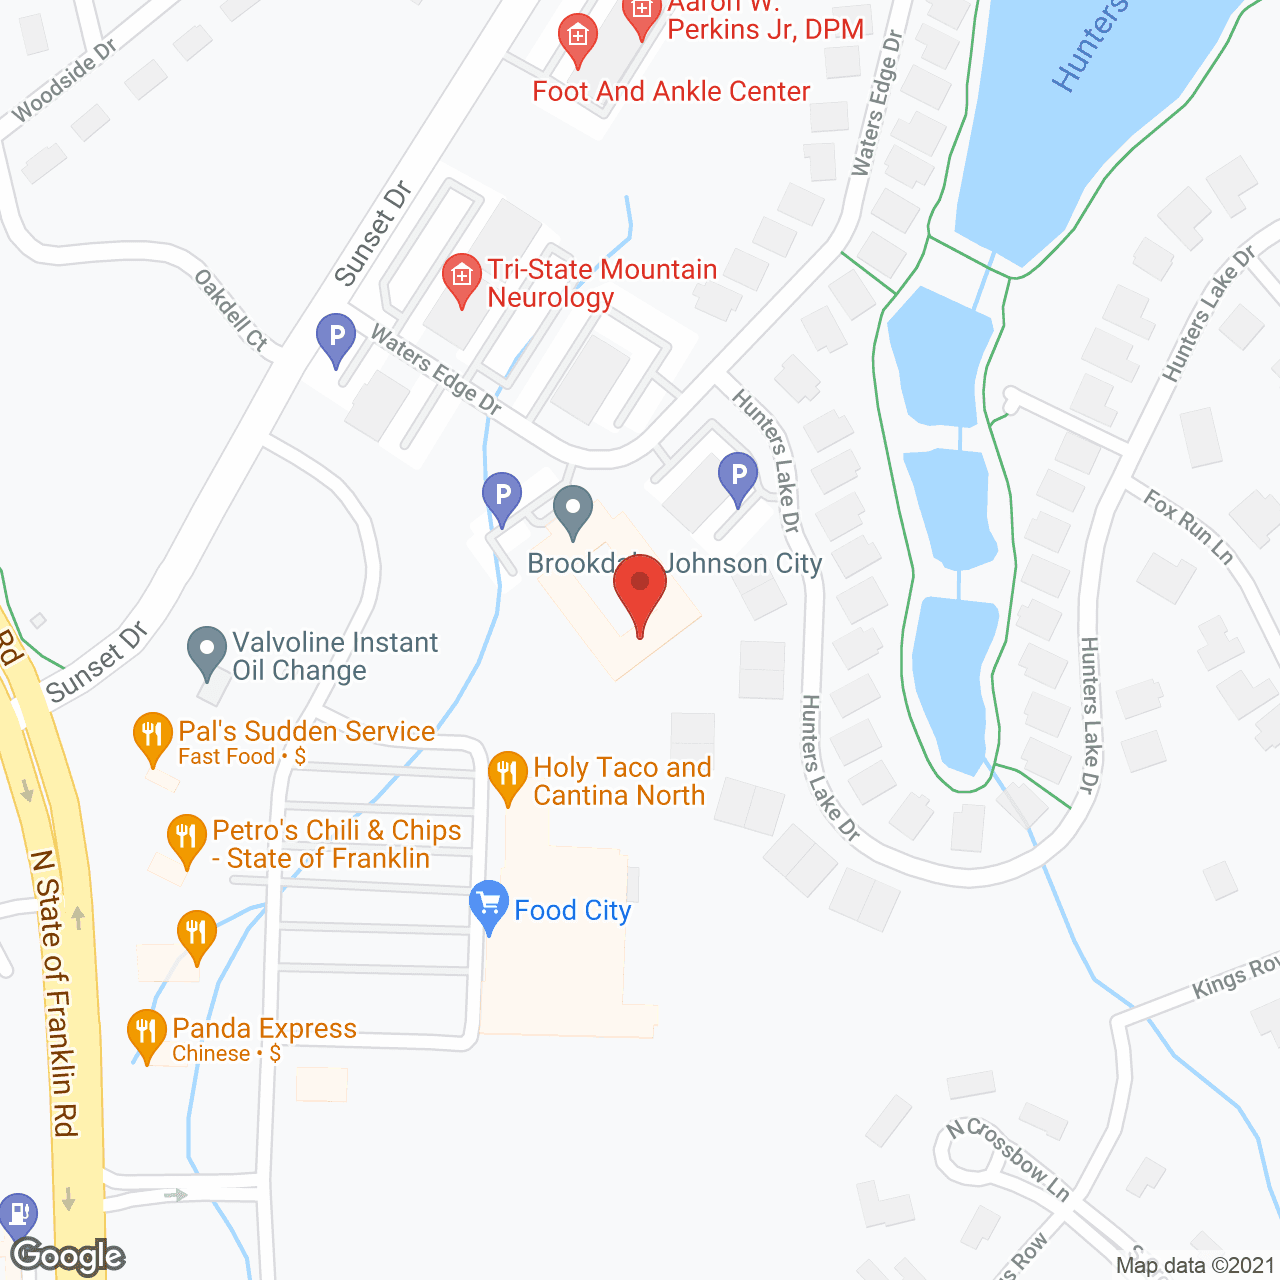 Brookdale Johnson City in google map